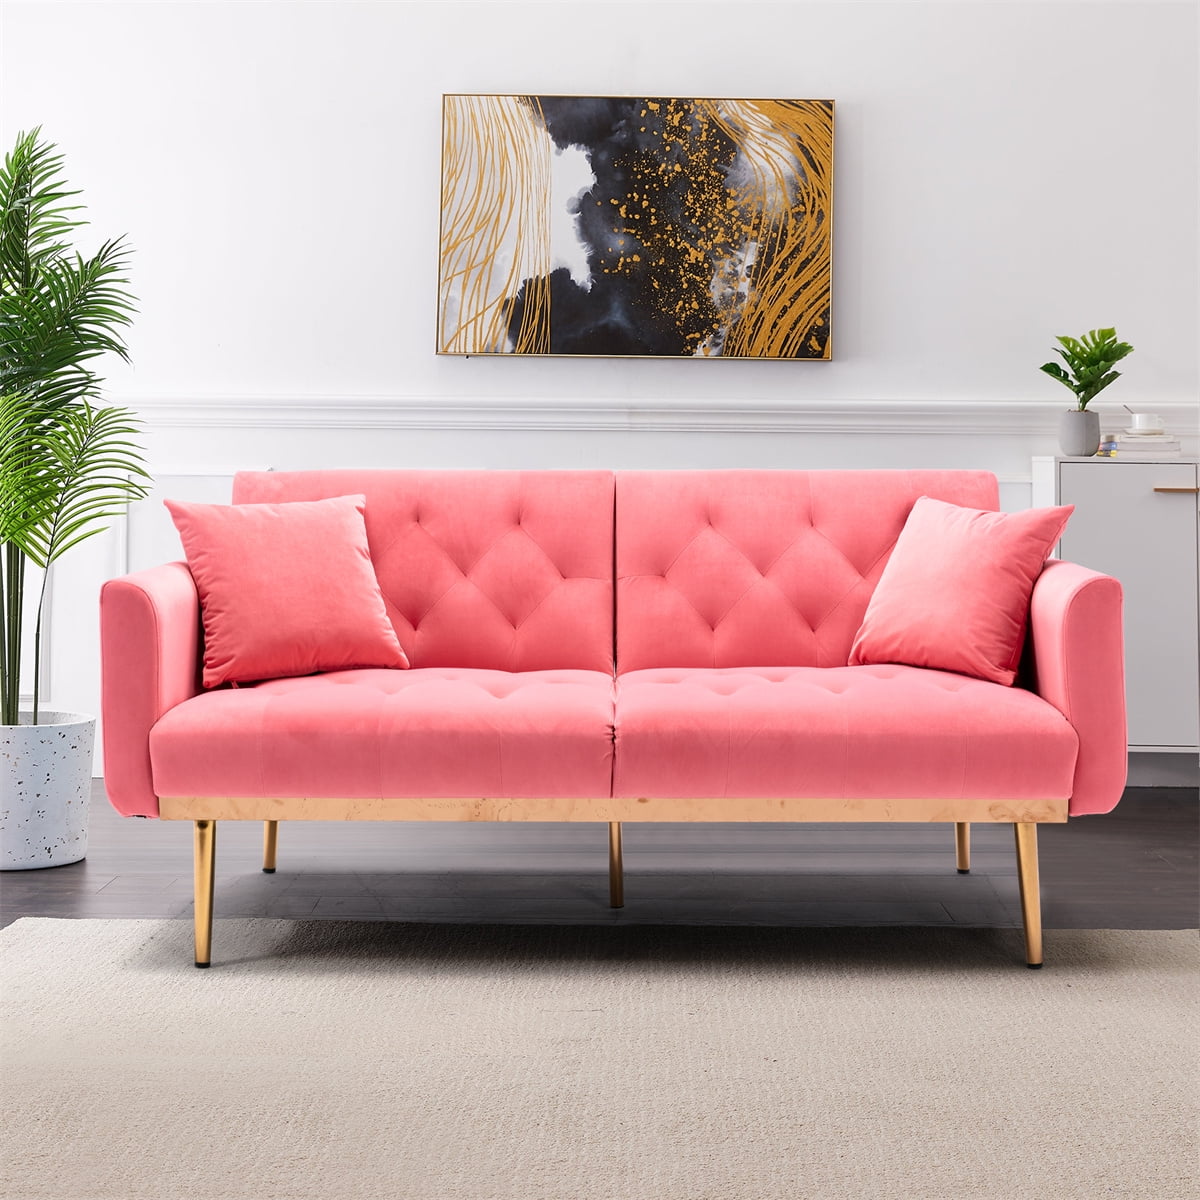 ARCTICSCORPION Accent Sofa,Modern Tufted Upholstered Velvet Sofa Bed ...